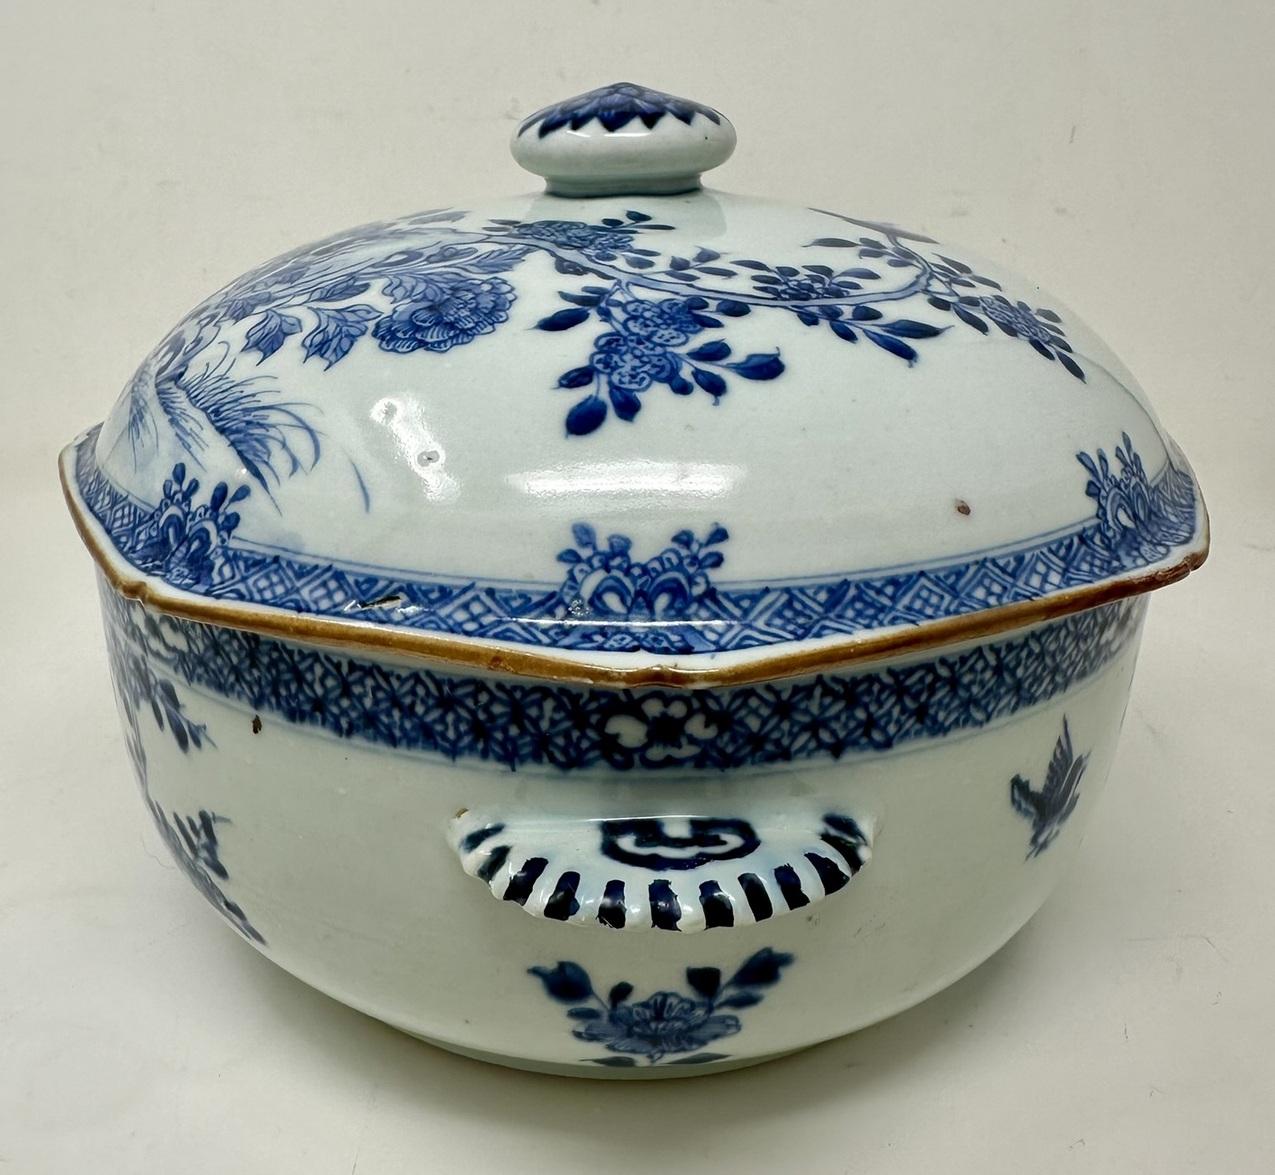 Ceramic Antique Chinese Export Porcelain Blue White Chien Lung Soup Tureen Centerpiece For Sale